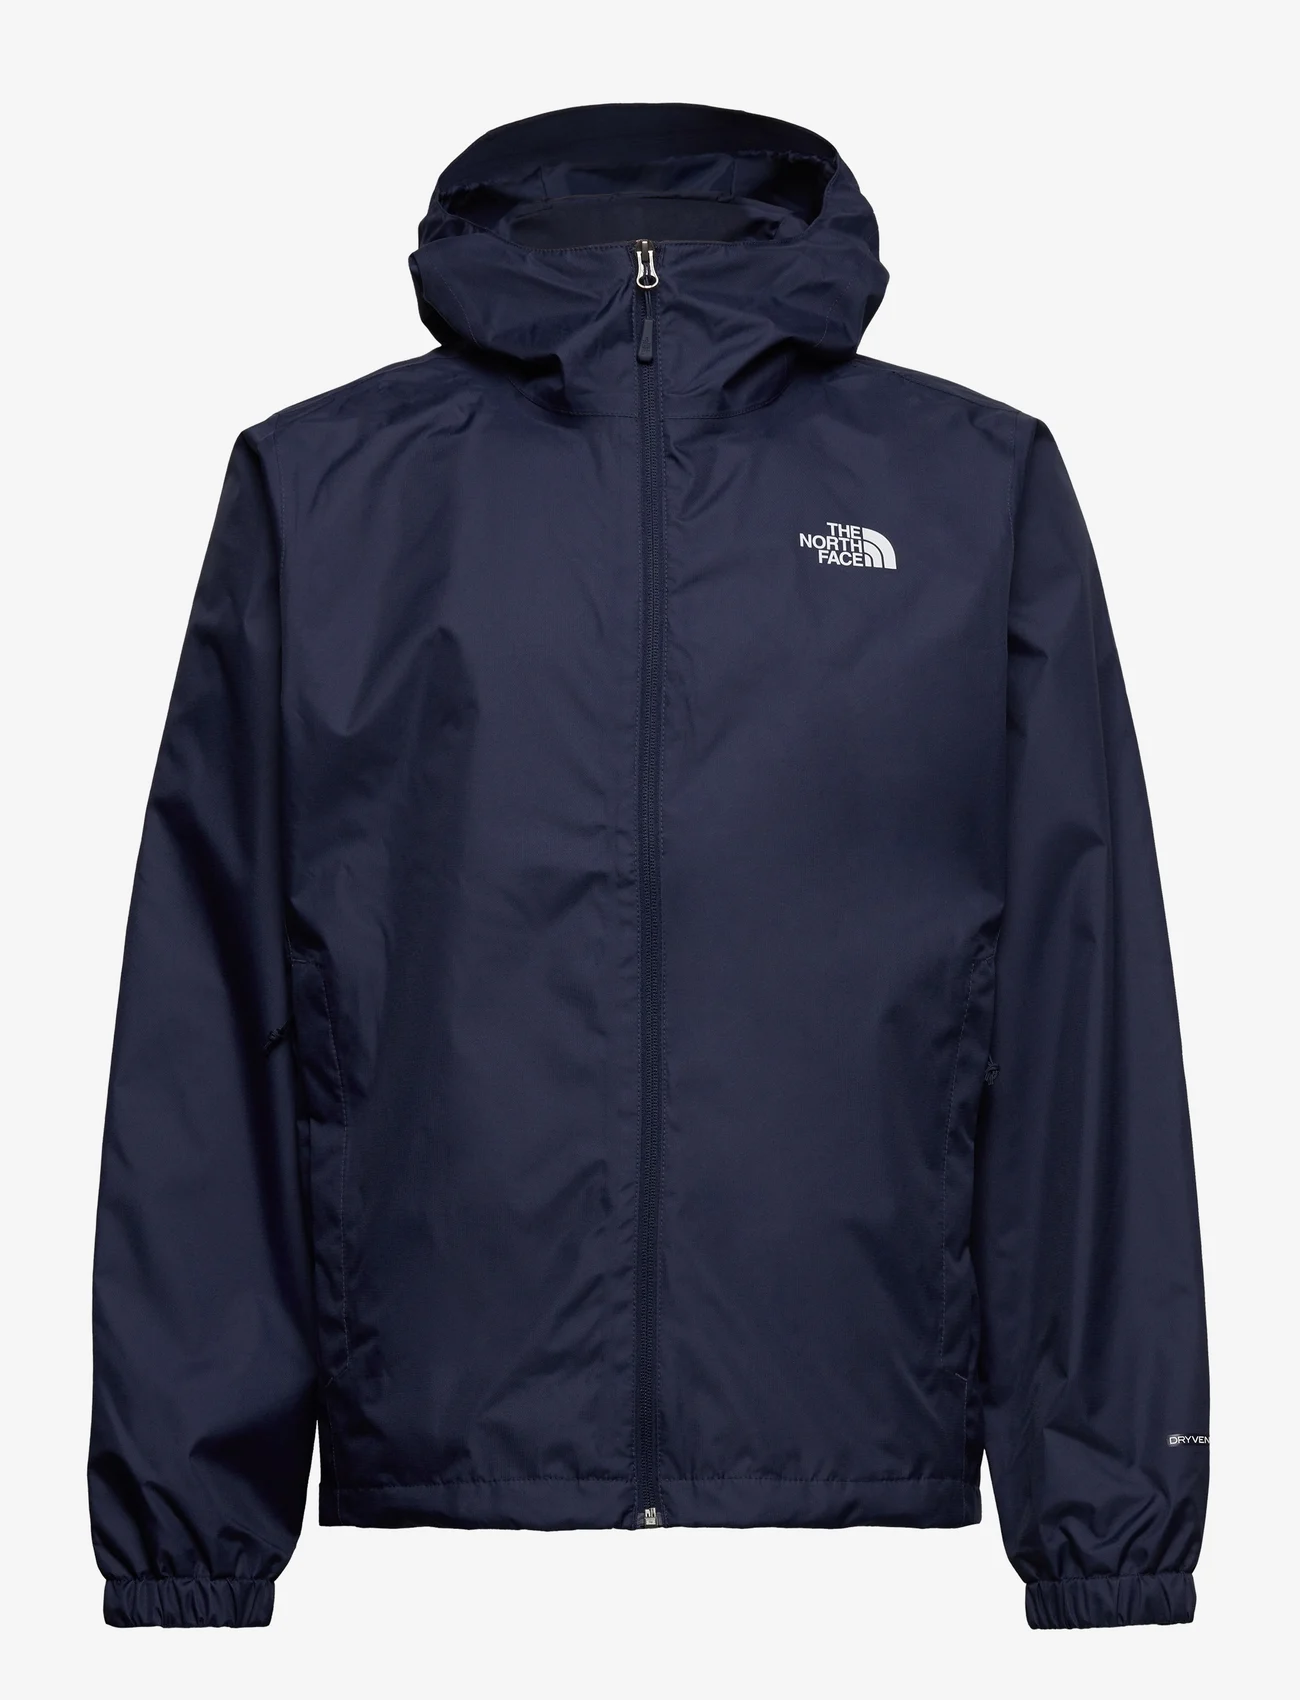 The North Face - M QUEST JACKET - EU - outdoor & rain jackets - summit navy - 0